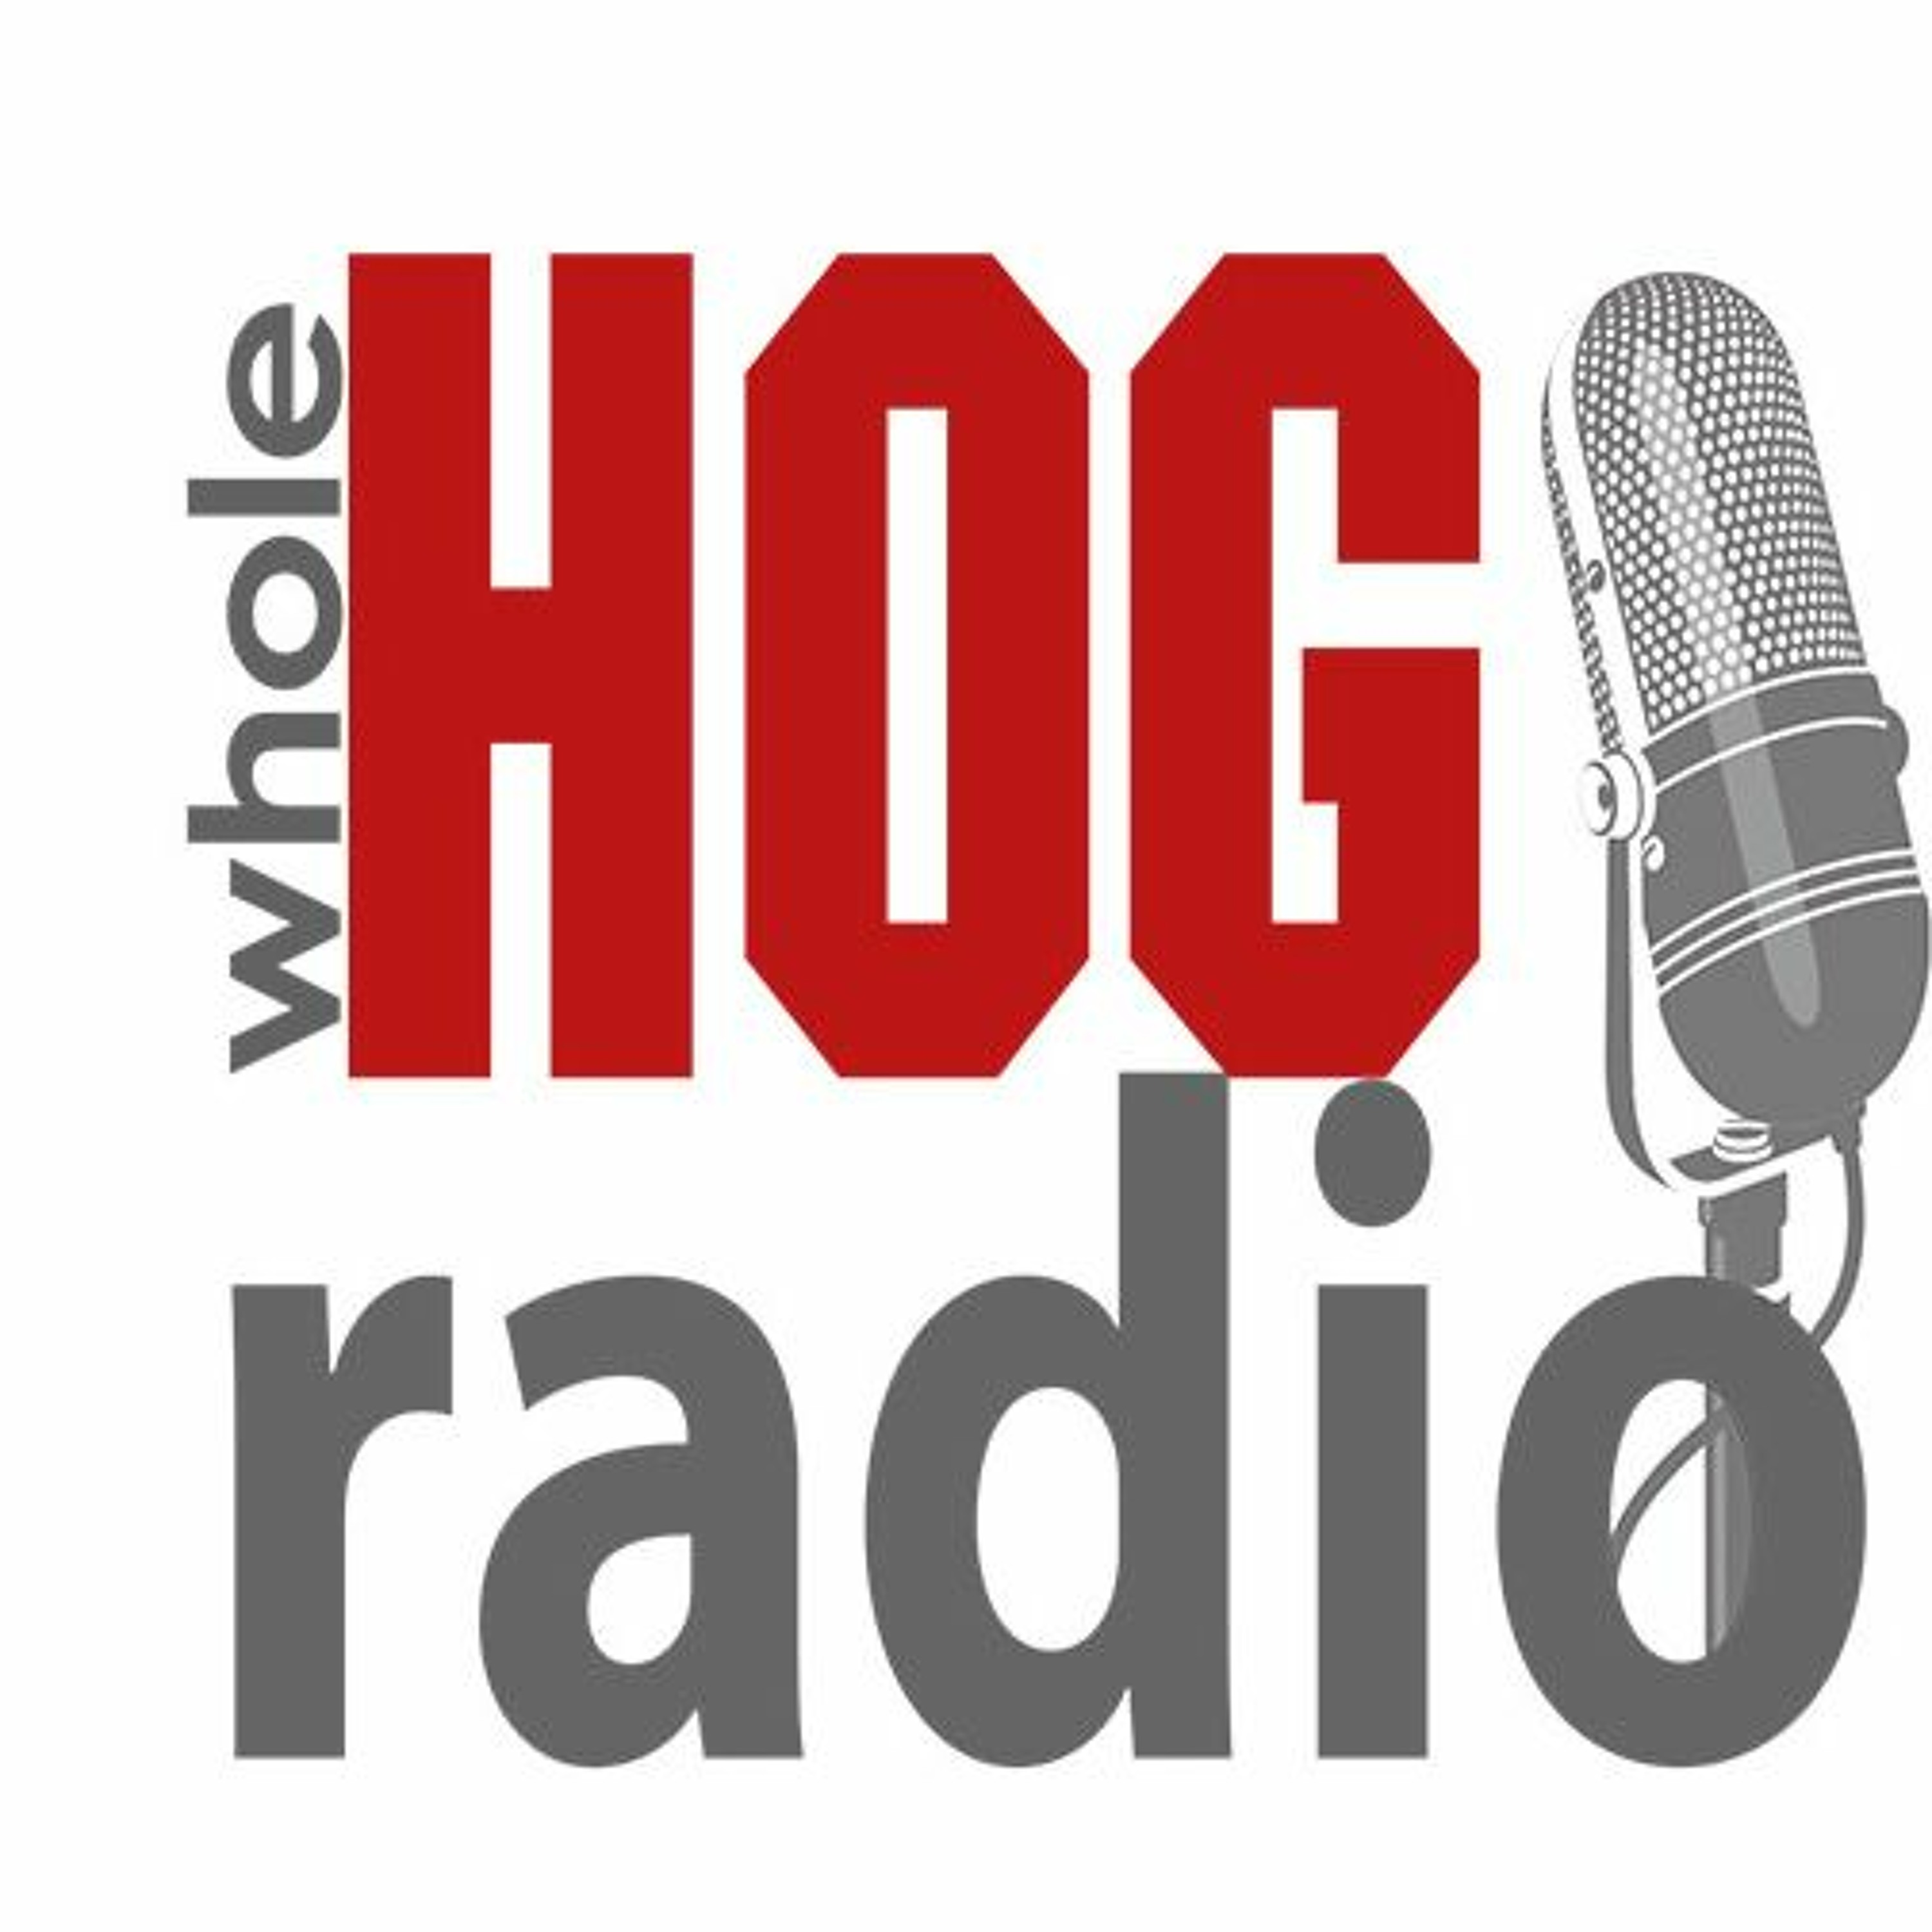 WholeHog Podcast: Best of the decade with Richard Davenport; Drew Davison previews TCU